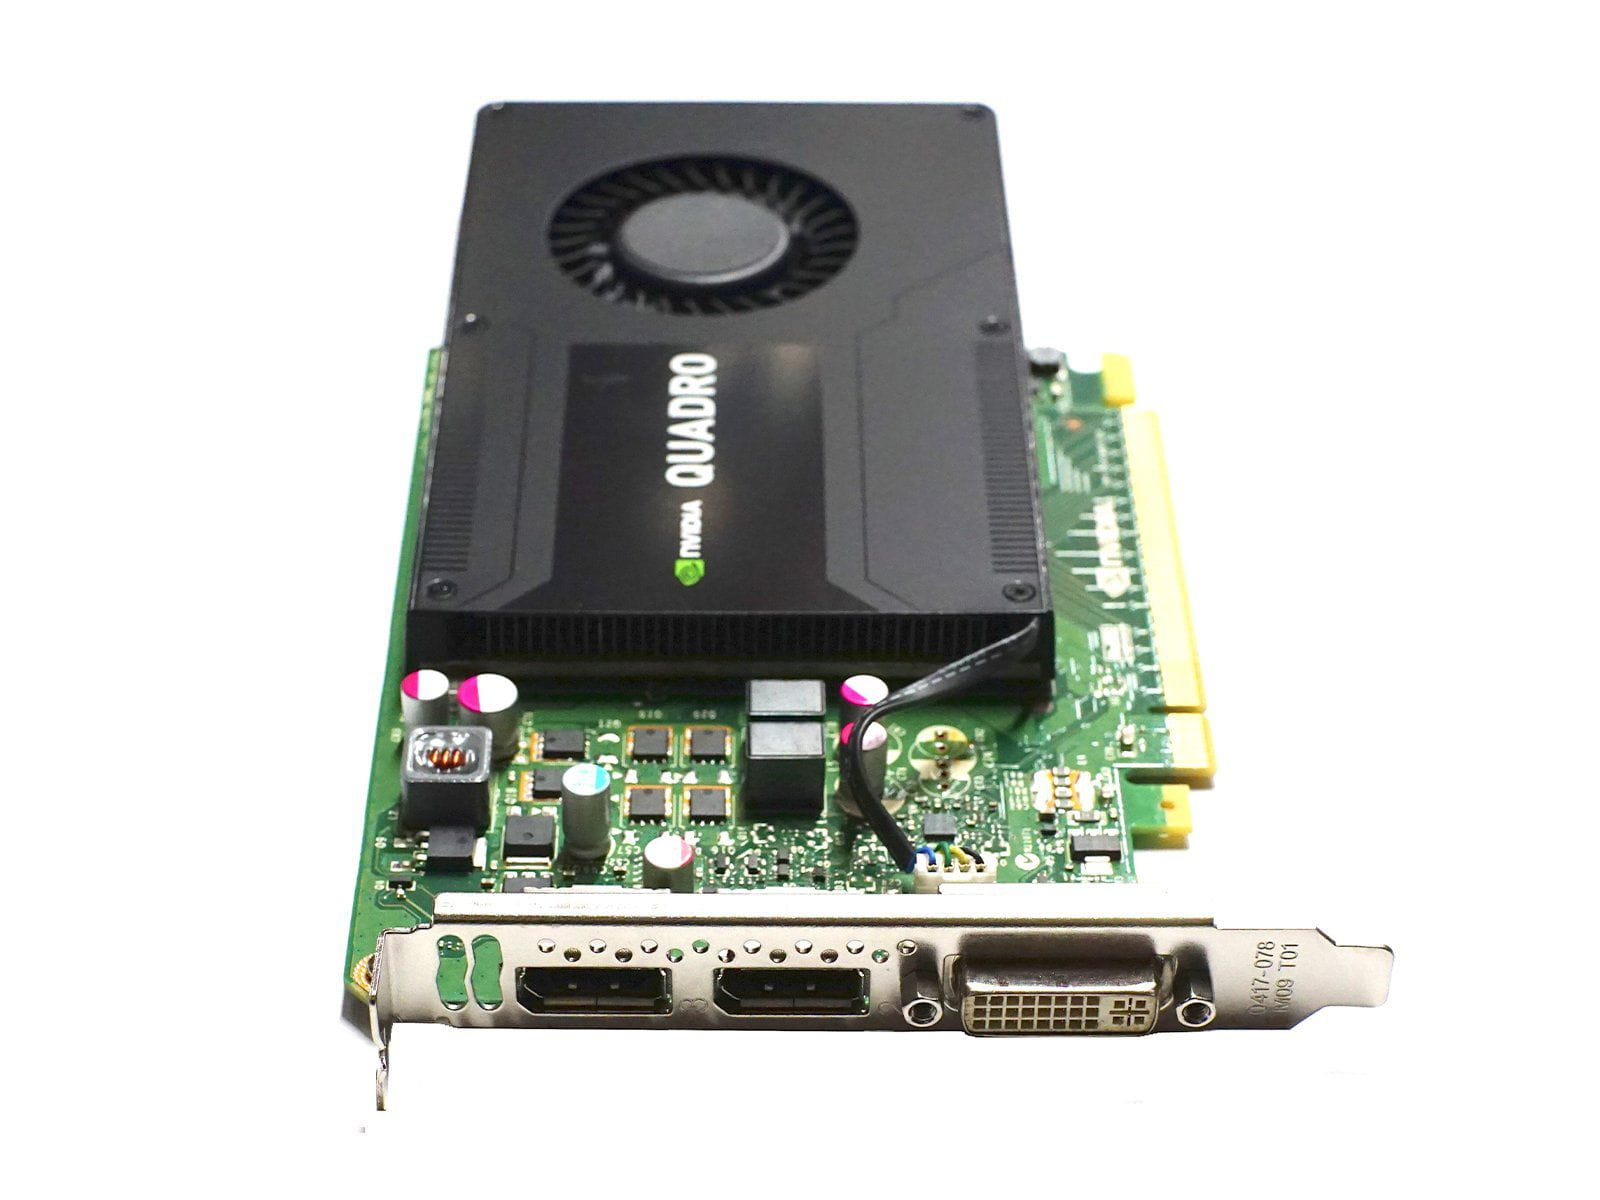 NVIDIA Quadro K2200 4 GB Grafikkarte (VCQK2200-PB) Monitors.com